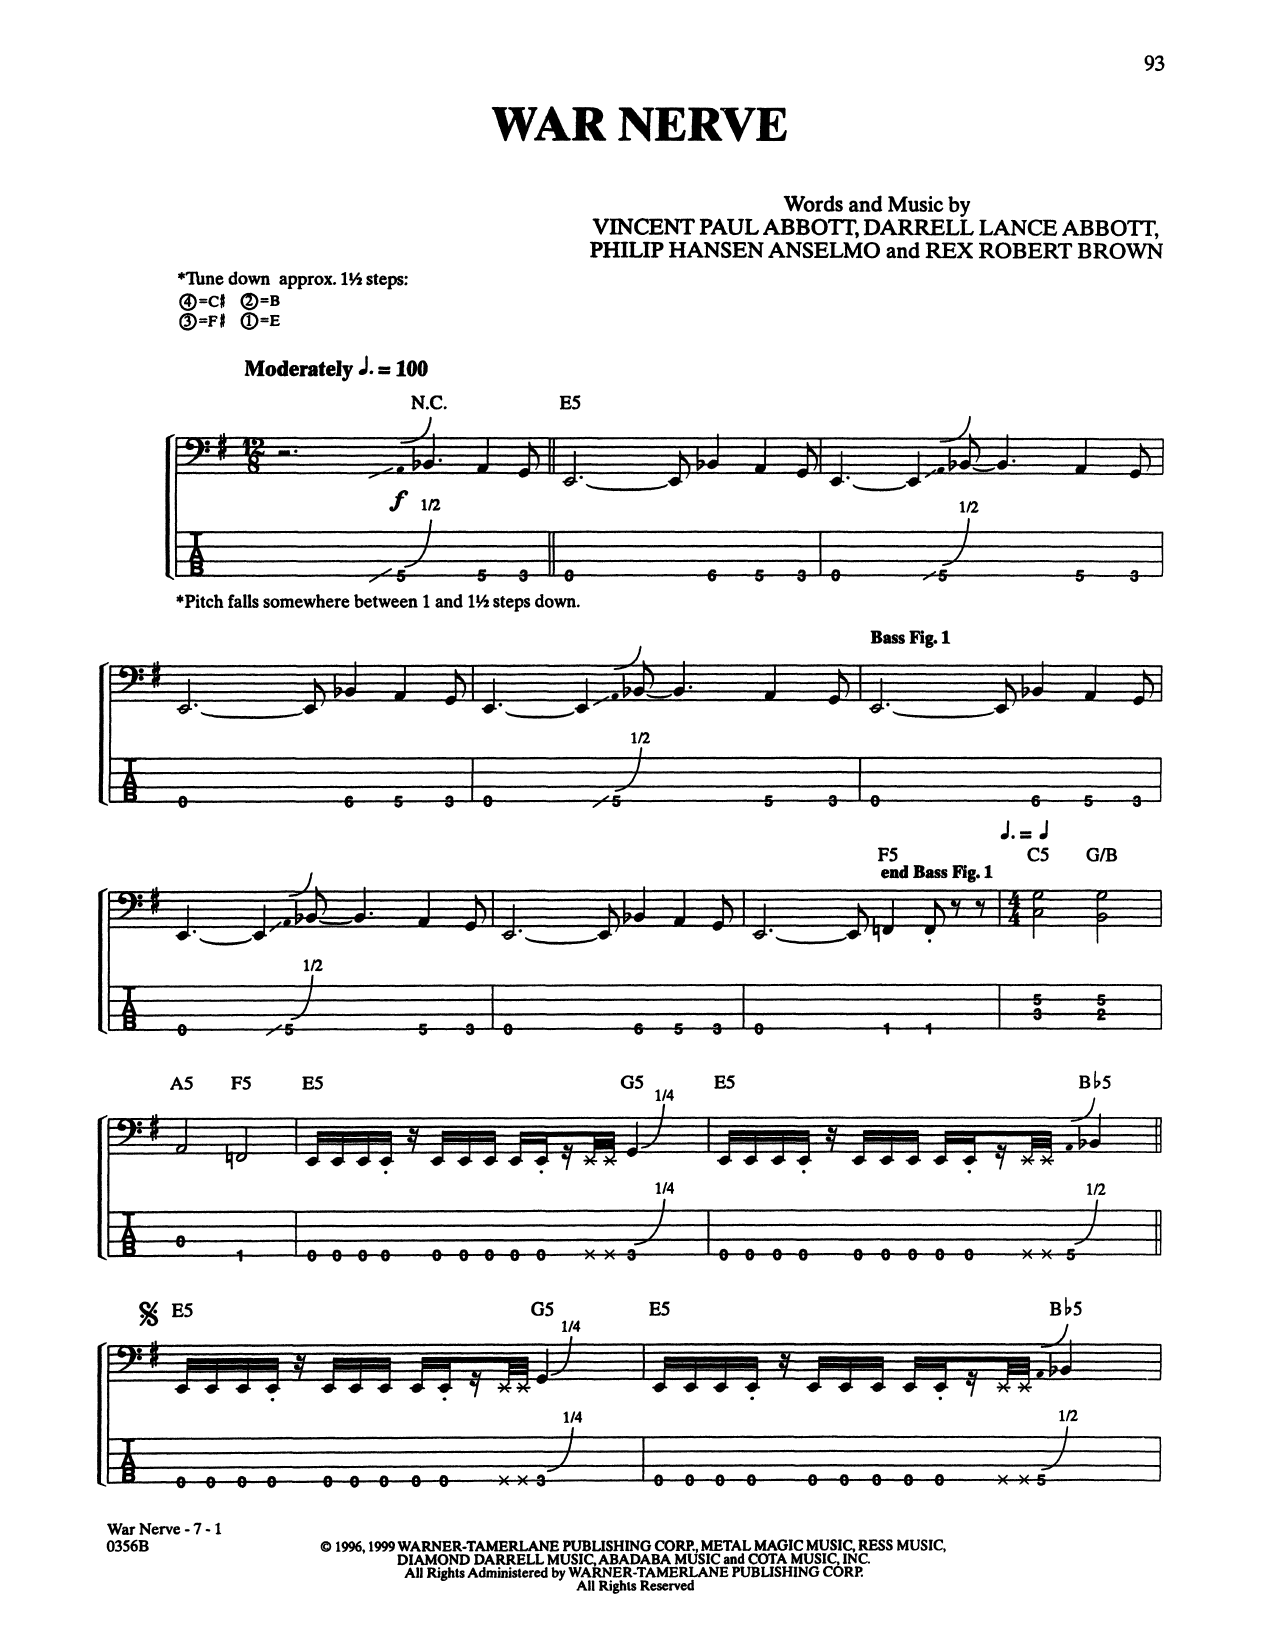 Pantera War Nerve Sheet Music Notes & Chords for Bass Guitar Tab - Download or Print PDF